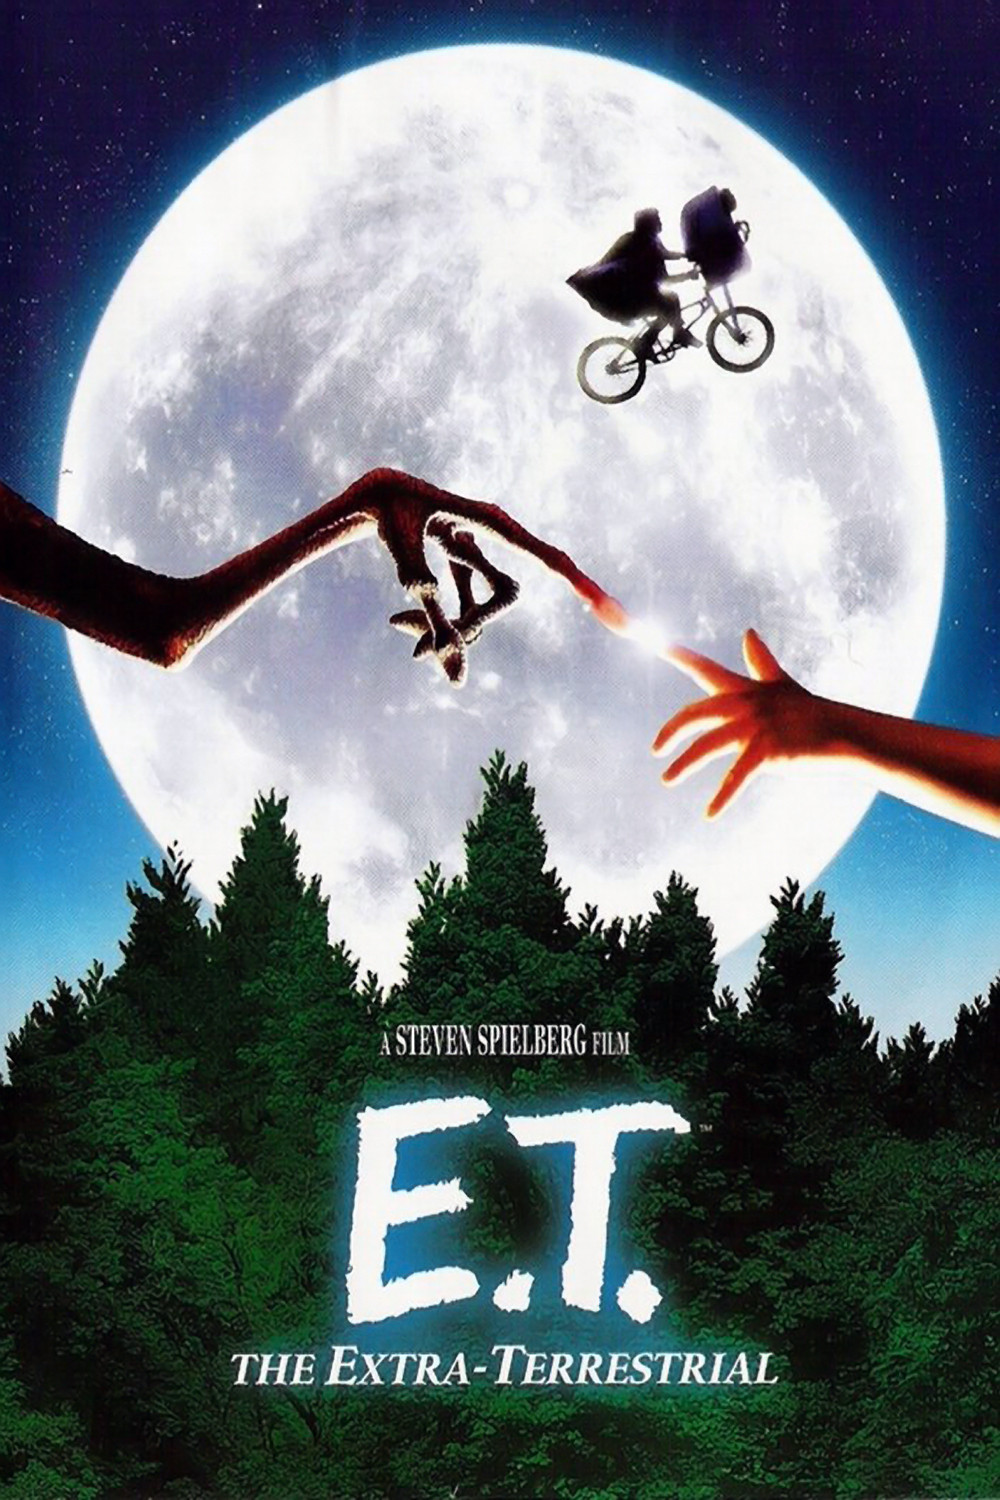 Aero Theatre Presents: Family Matinee 70mm! E.T. The Extra-Terrestrial